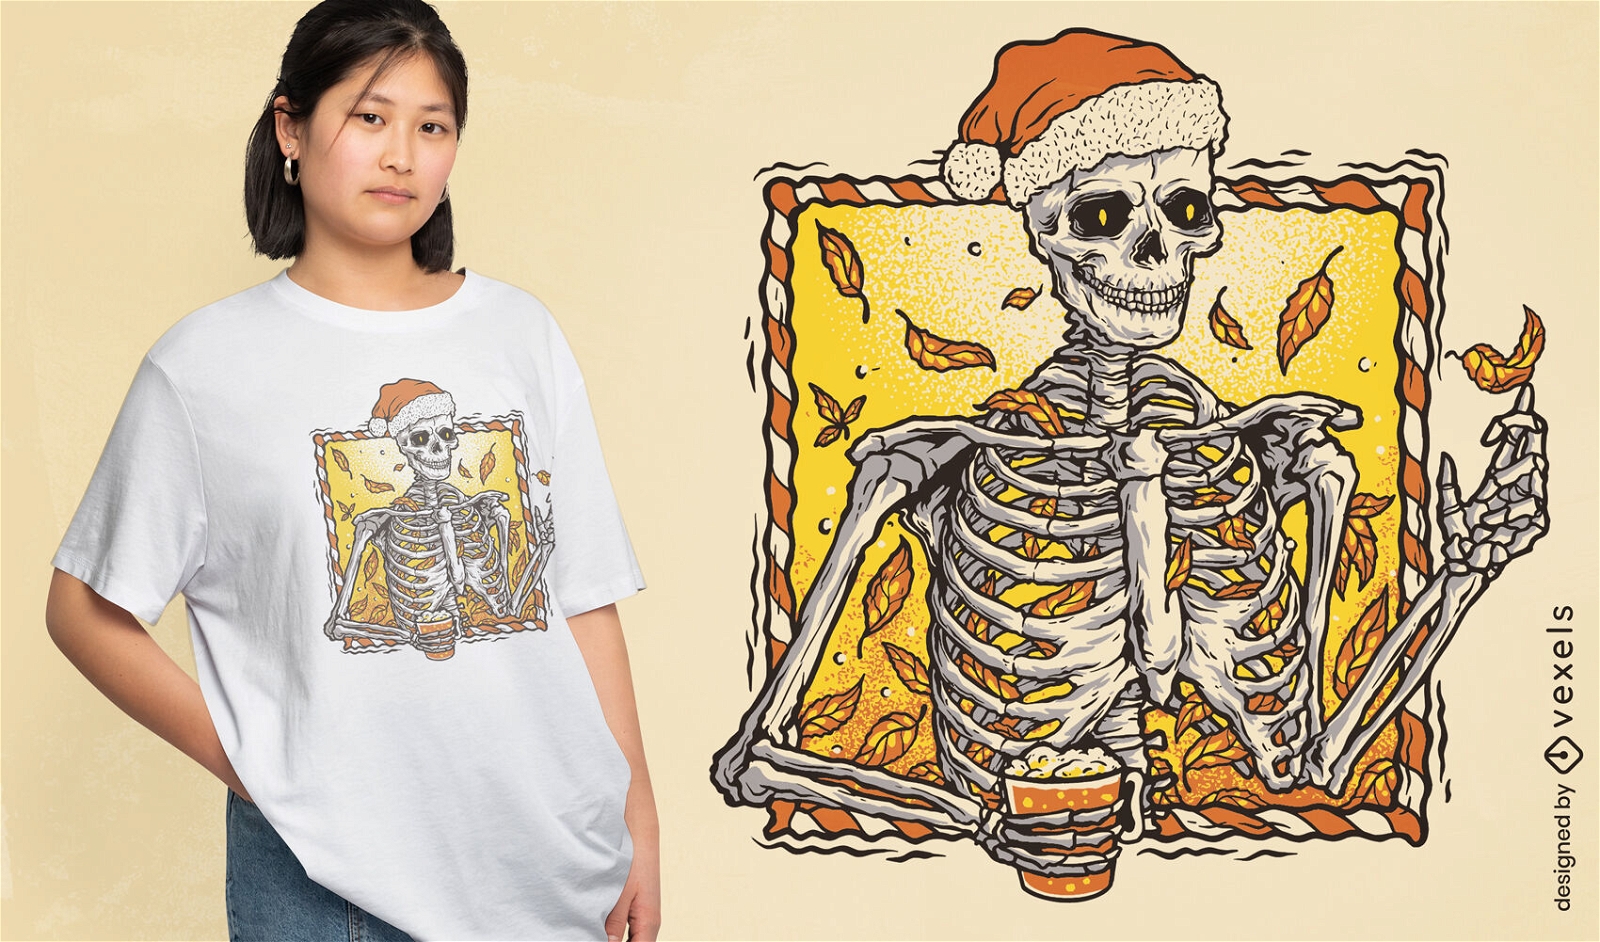 Dise?o de camiseta de oto?o esqueleto navide?o.